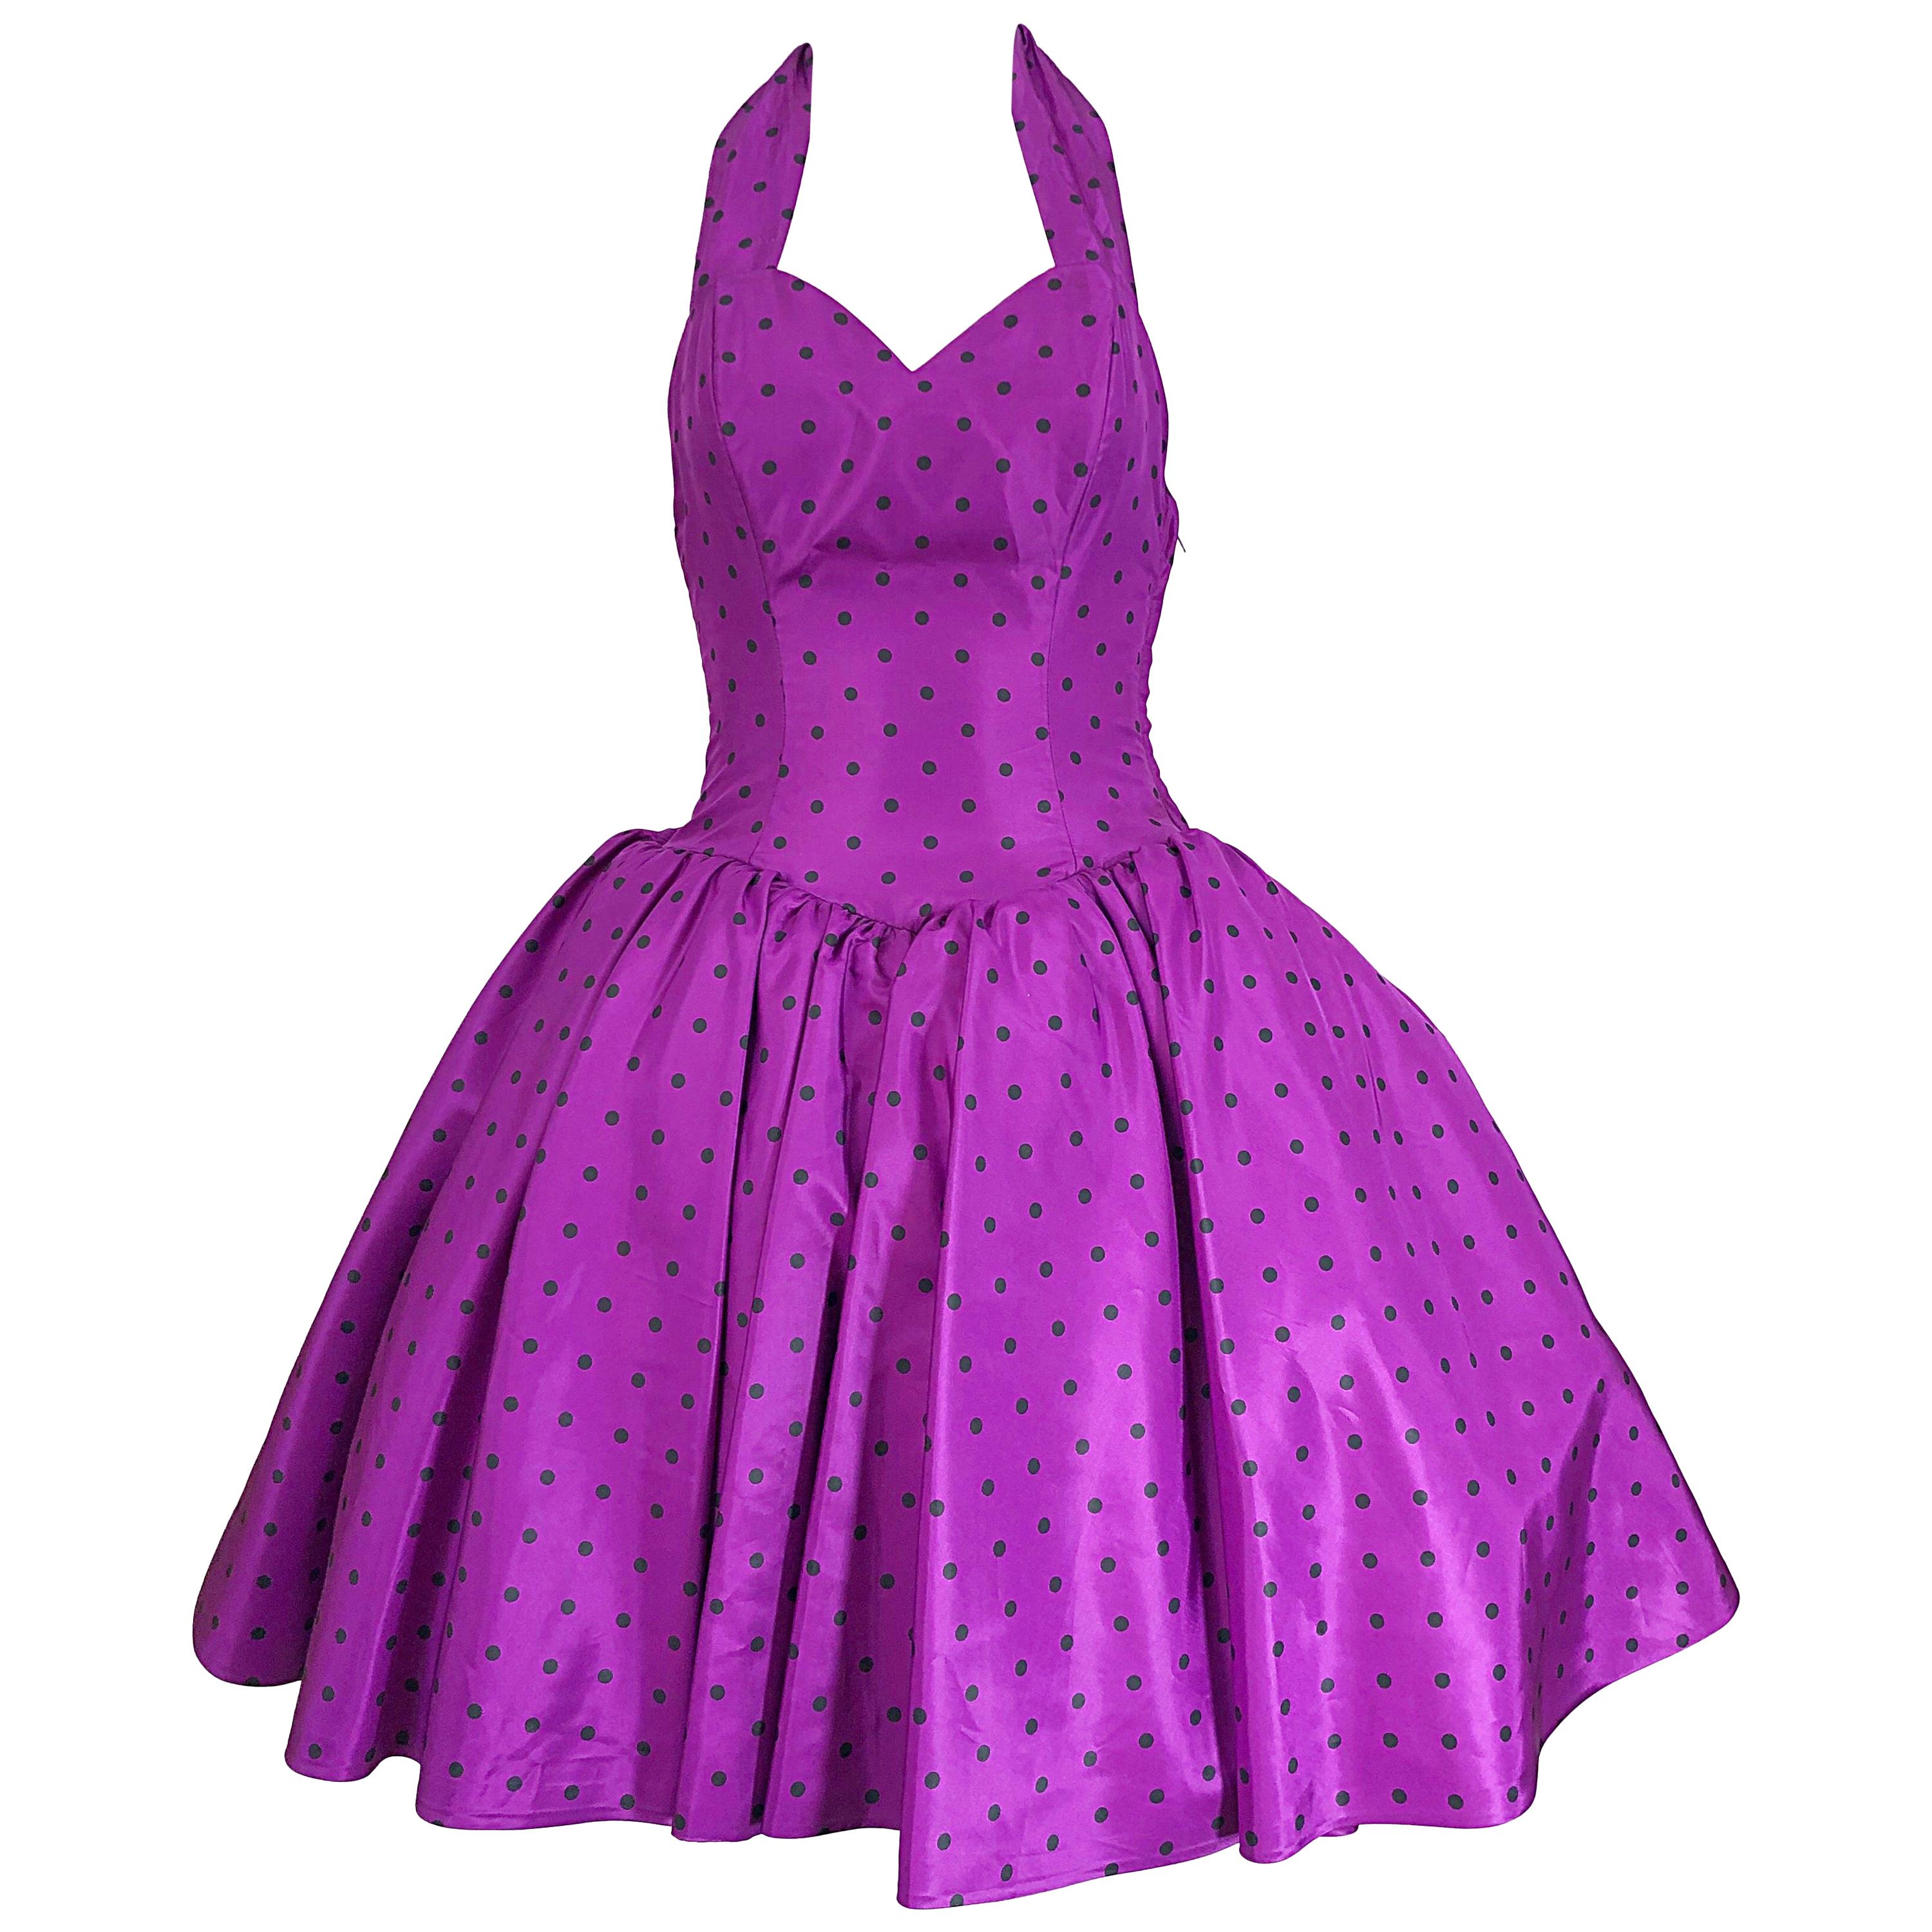 1980s Williwear Willi Smith Size 2/4 Purple Polka Dot Vintage 80s Taffeta Dress